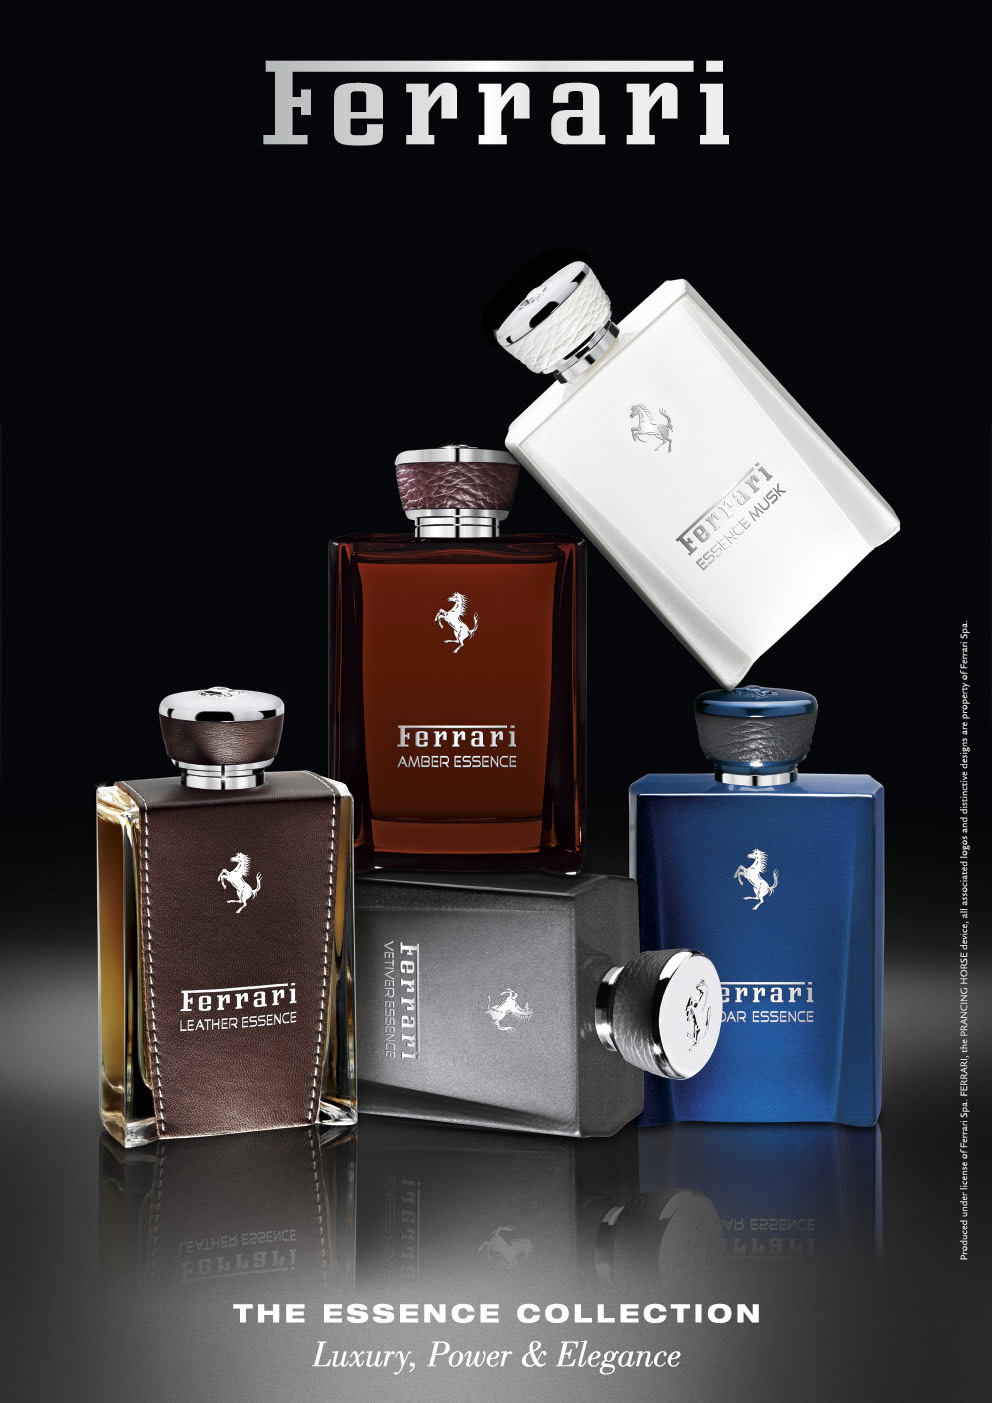 inoxidable lanza símbolo Investindustrial - Perfume Holding